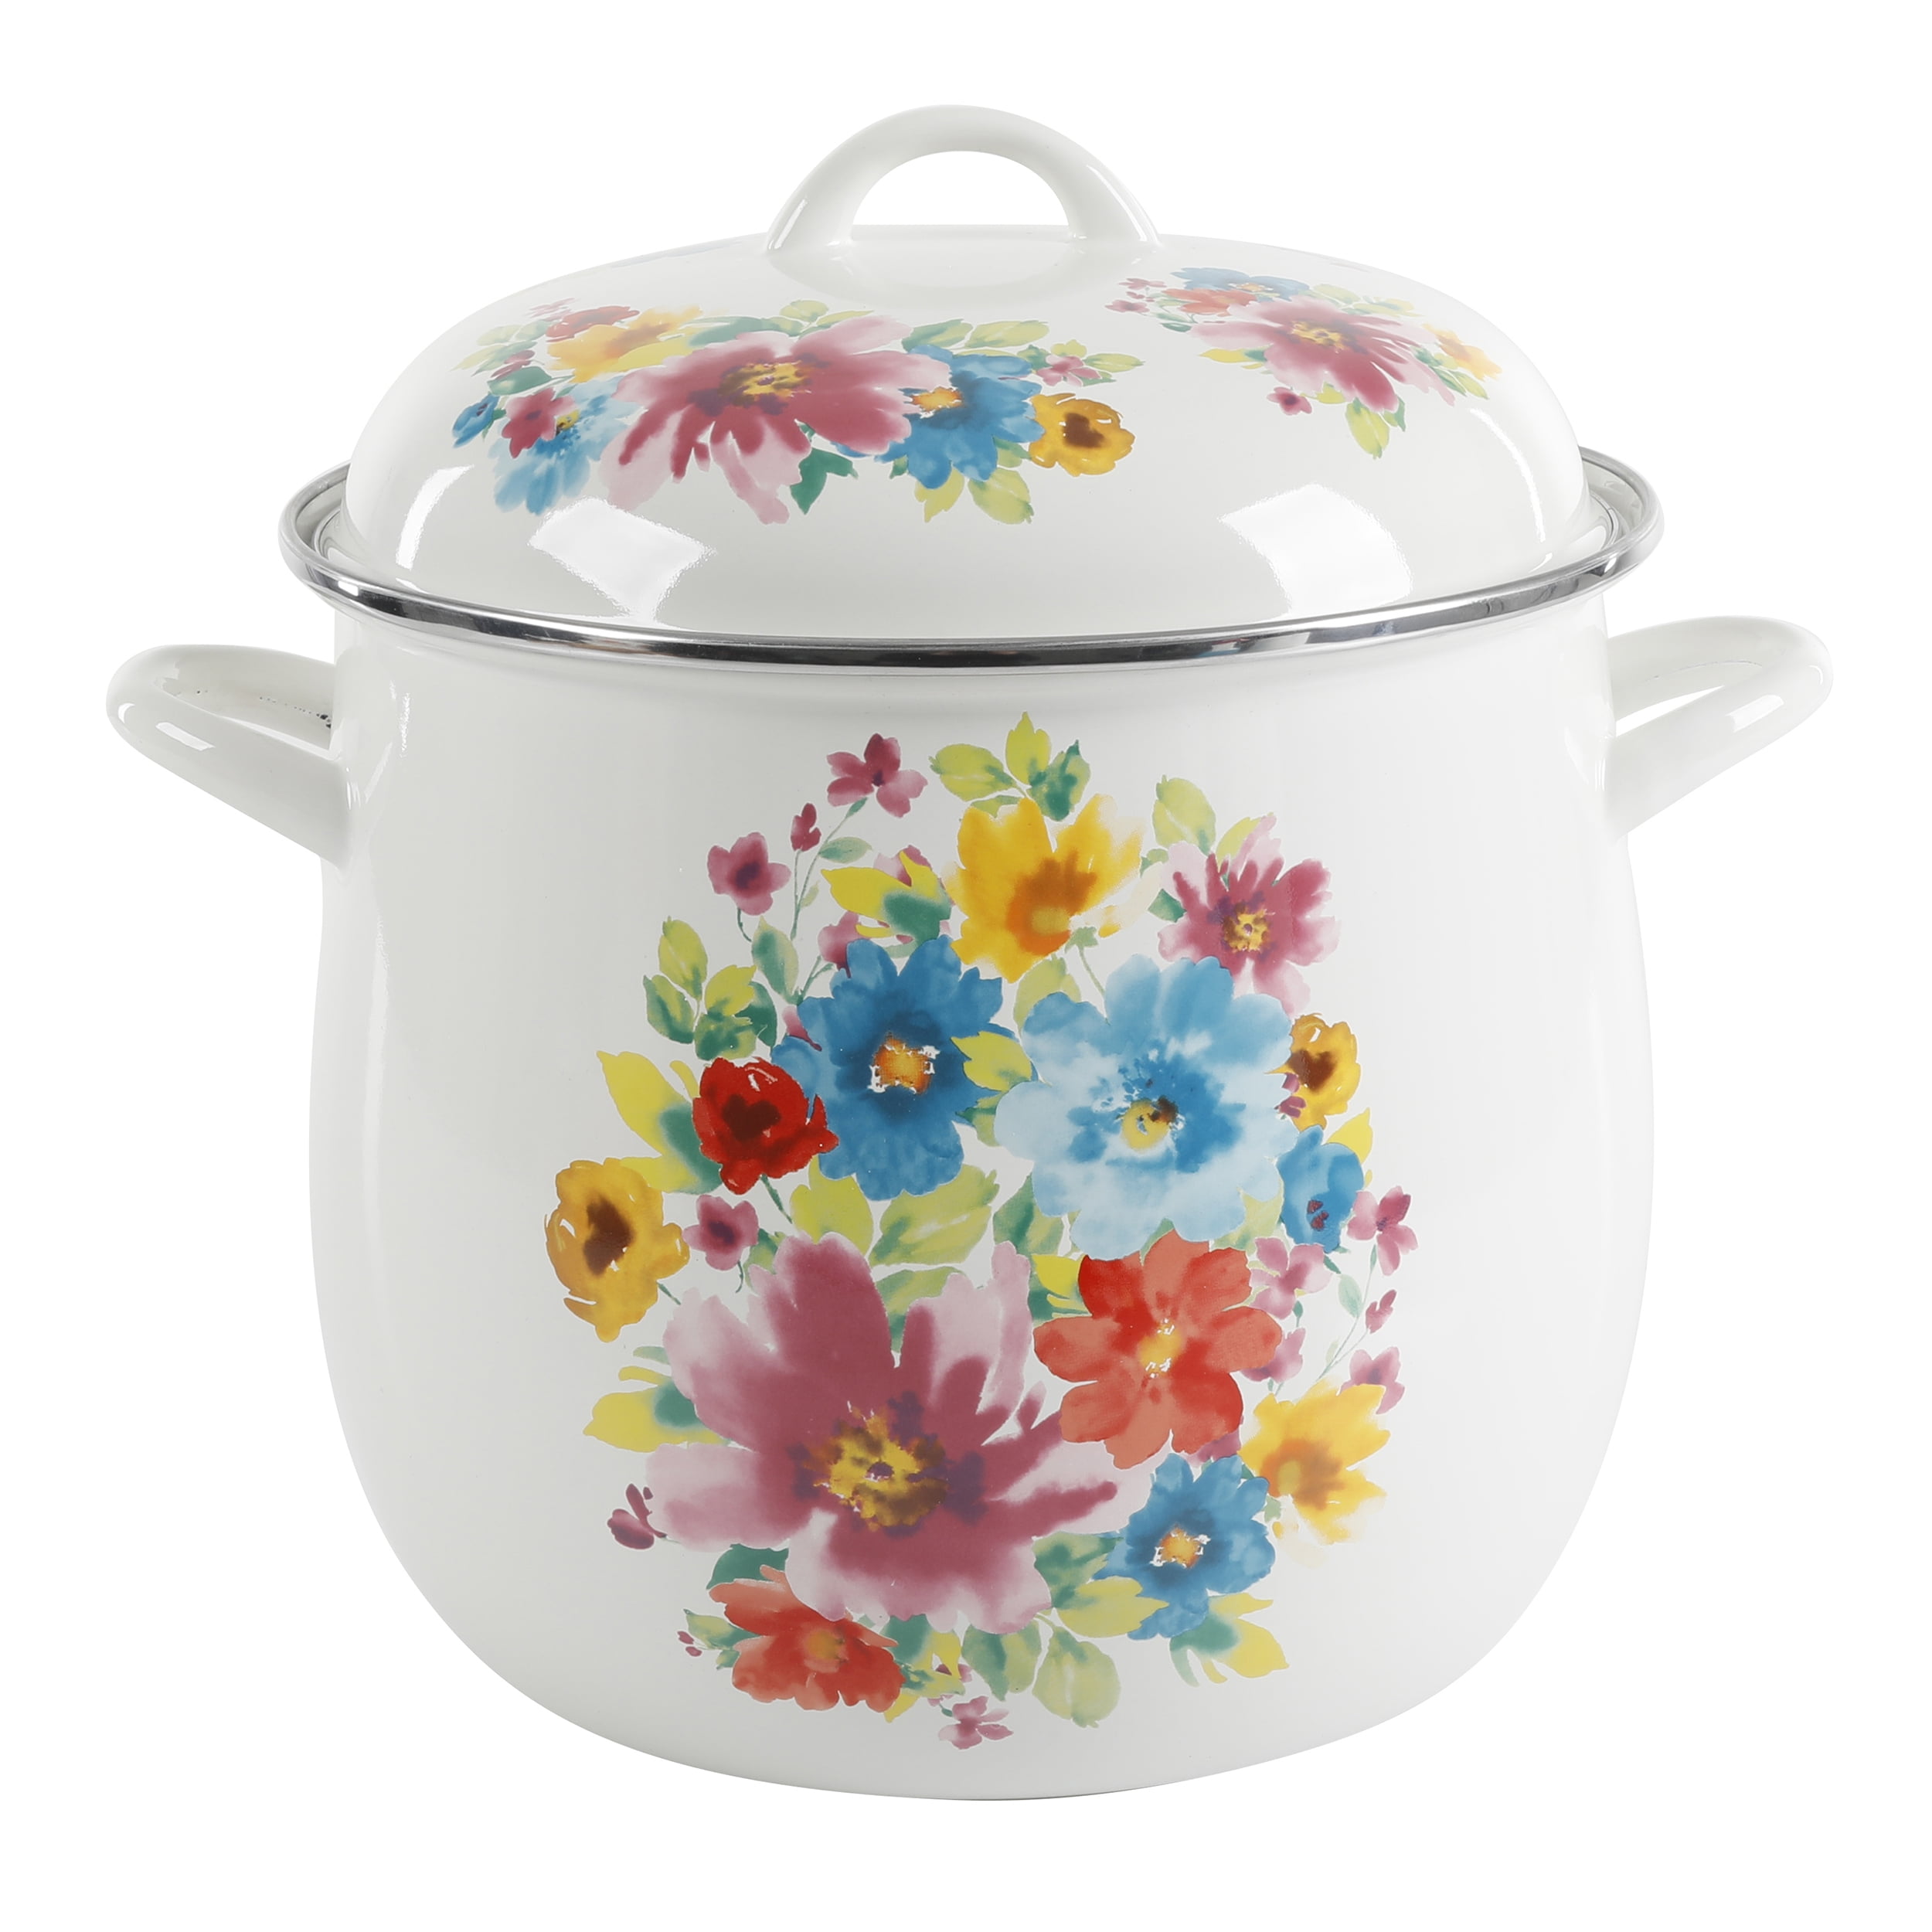 Dolls House Miniature Medium size casserole/cooking pot Floral design 